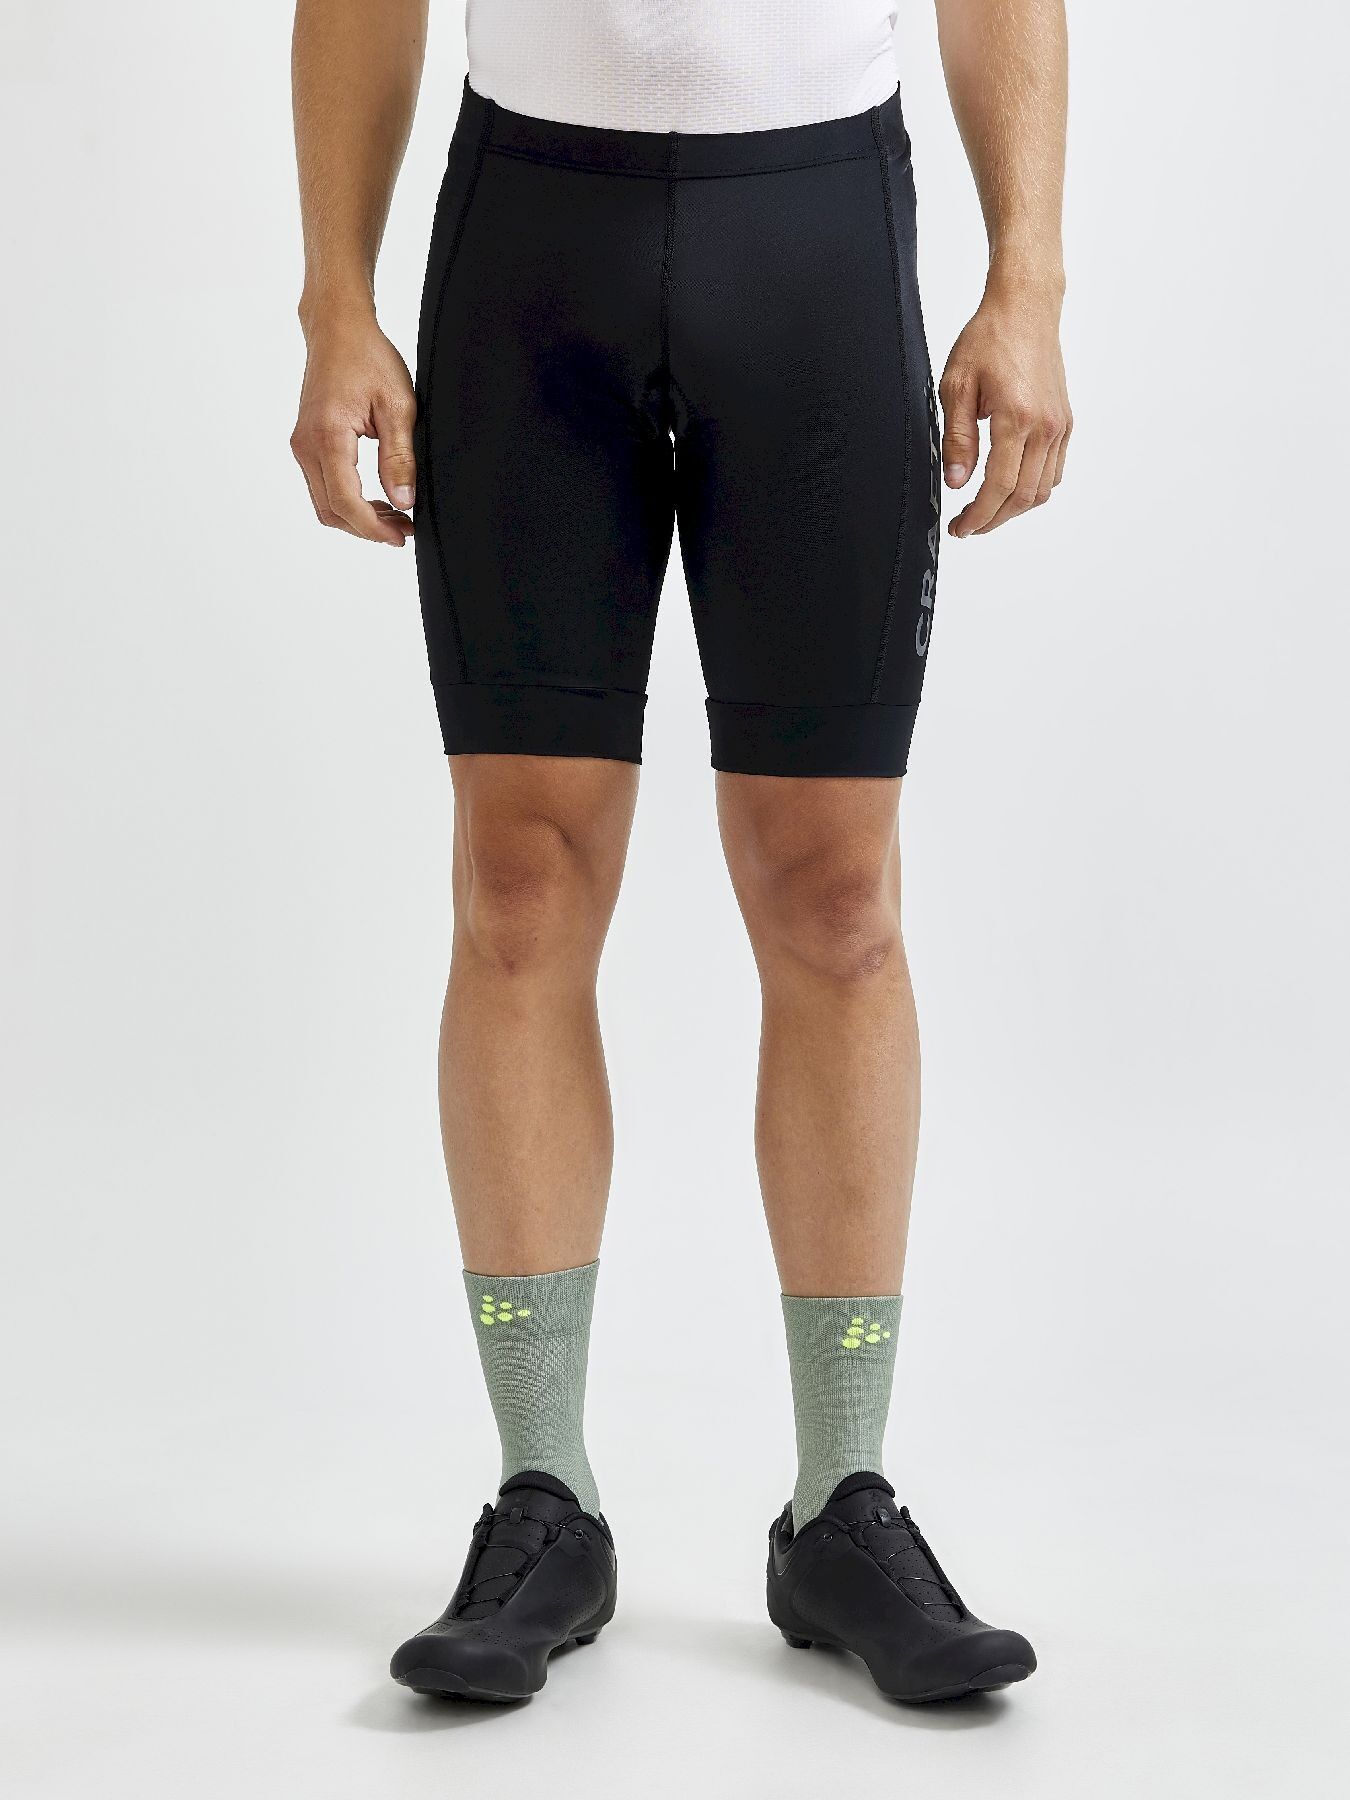 Craft Core Endurance Shorts - Cycling shorts - Men's